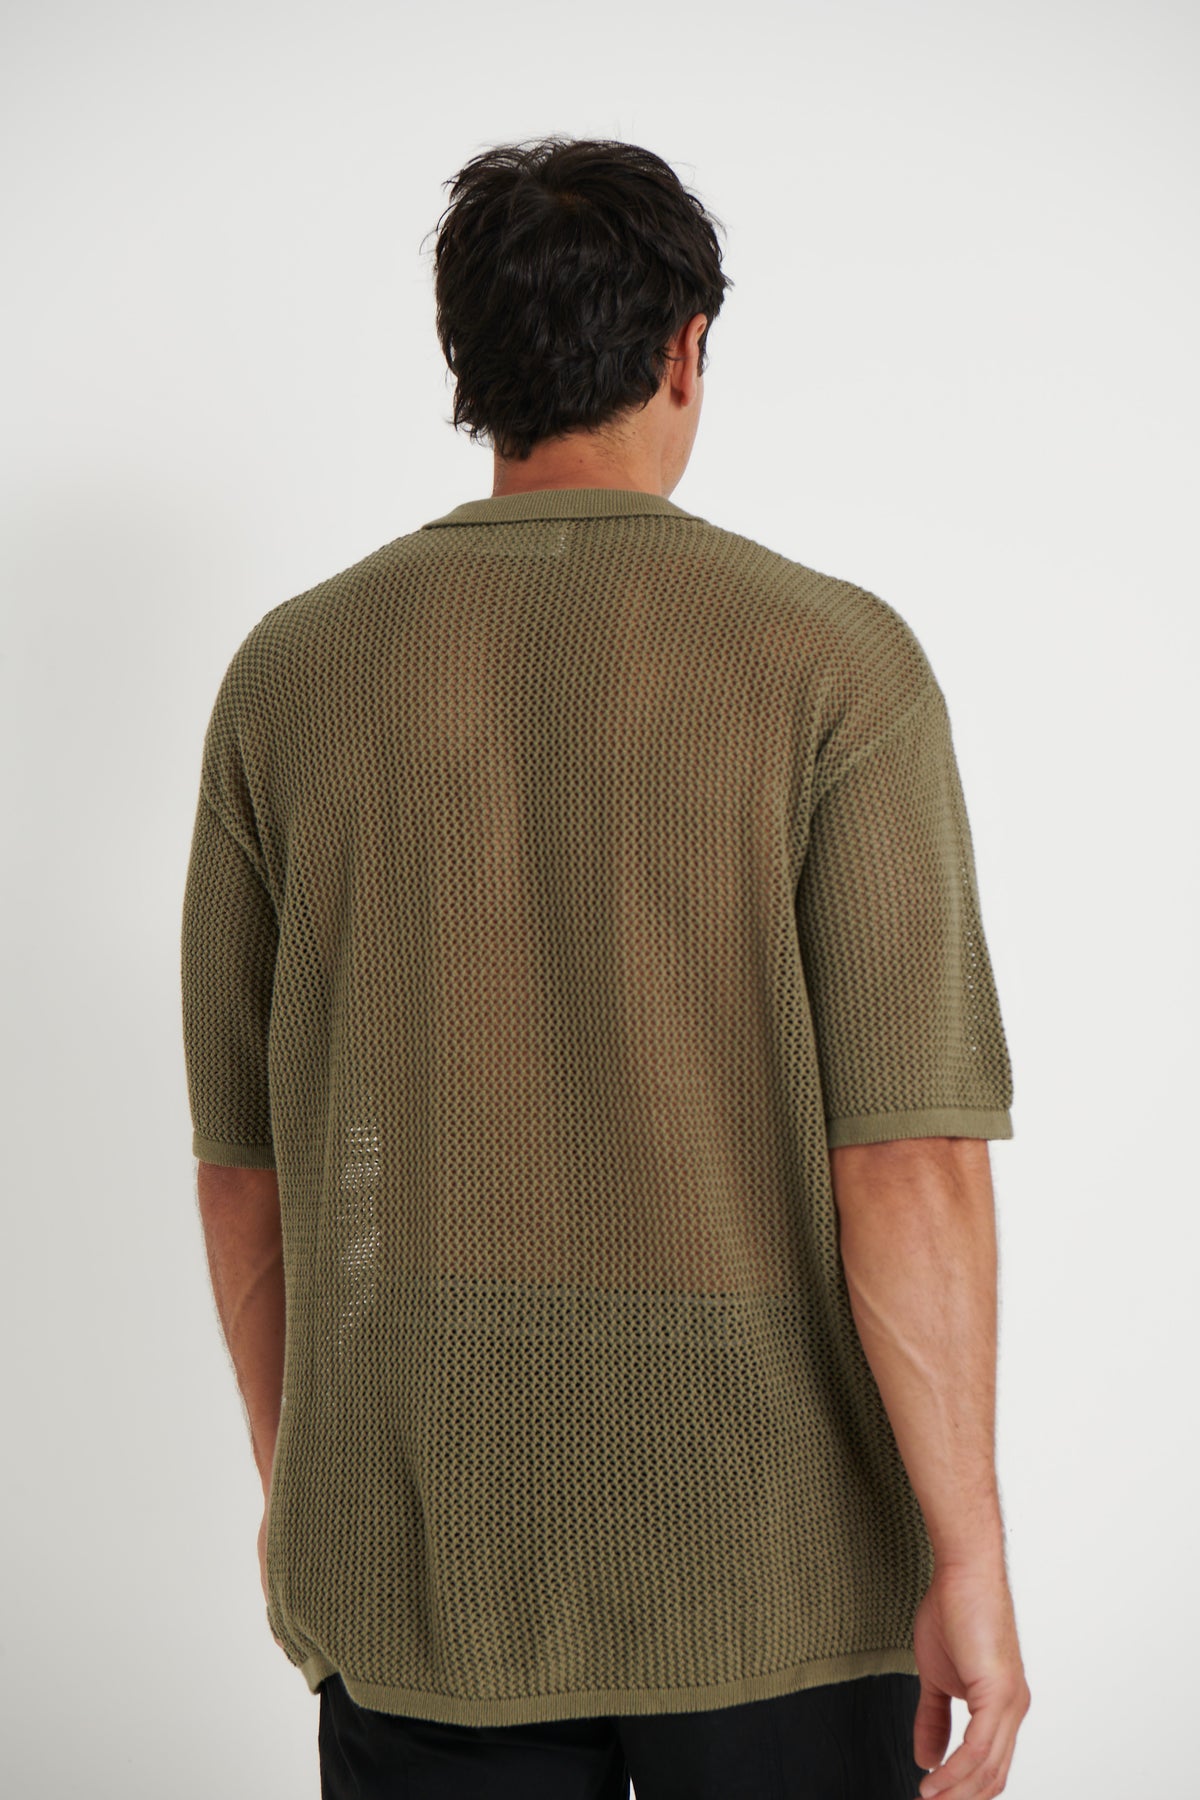 NTH Crochet Knit Shirt Army - FINAL SALE